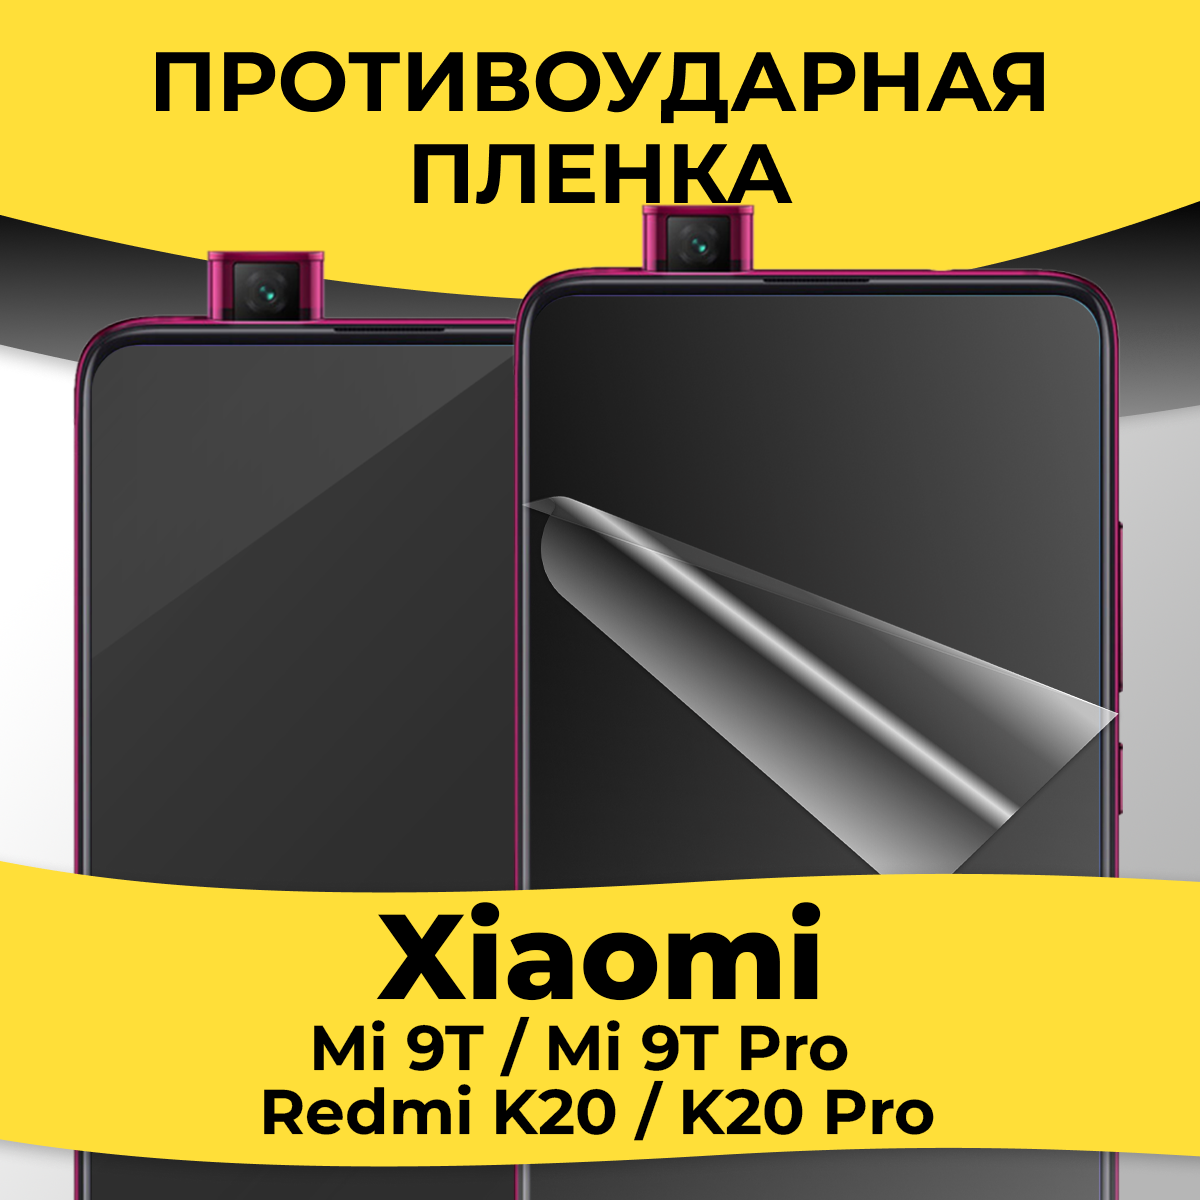 Комплект 2 шт. Гидрогелевая пленка для смартфона Xiaomi Mi 9T / Mi 9T Pro / Redmi K20 / K20 Pro / Защитная пленка на смартфон Сяоми Ми 9Т / Ми 9Т Про / К20 / К20 Про